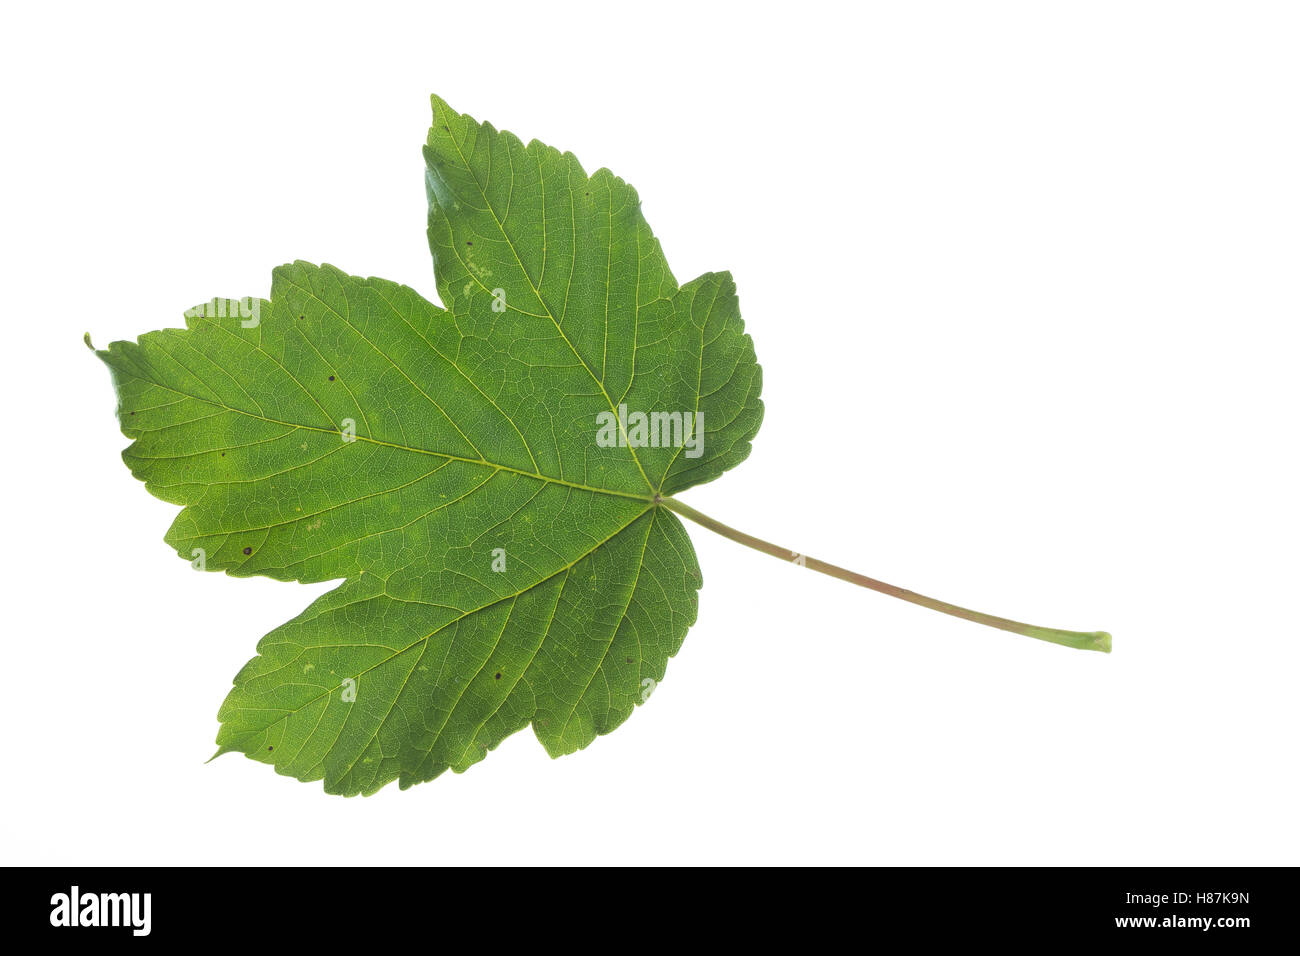 Berg-Ahorn, Bergahorn, Ahorn, Acer pseudoplatanus, Sycamore, Erable sycomore, acero di monte, l'érable sycomore. Blatt, Foto Stock